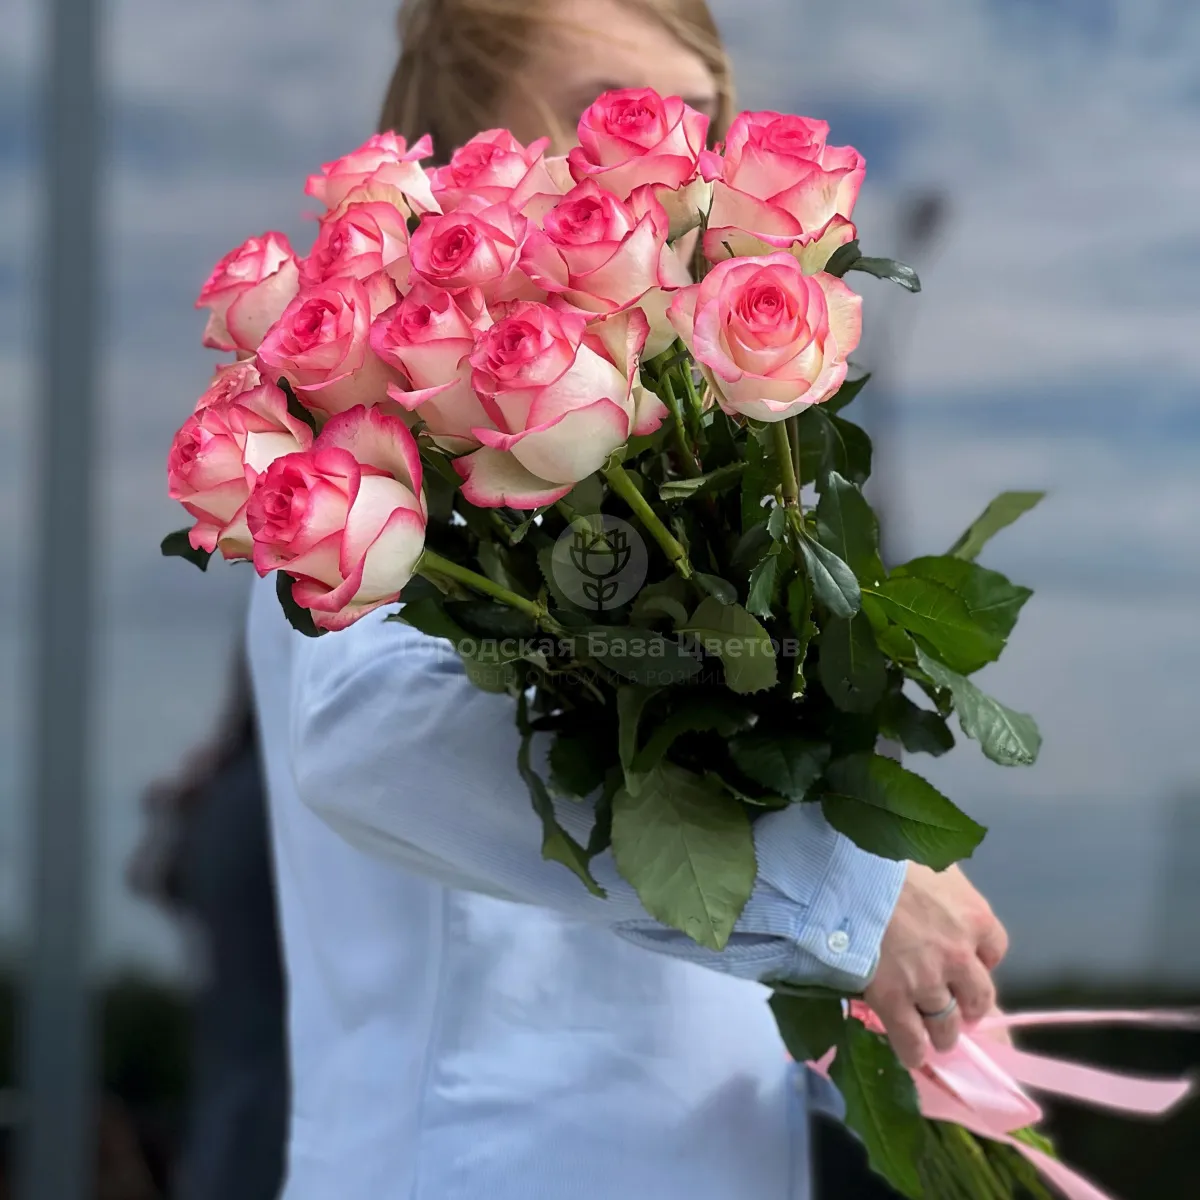 17 бело-розовых роз (70 см)